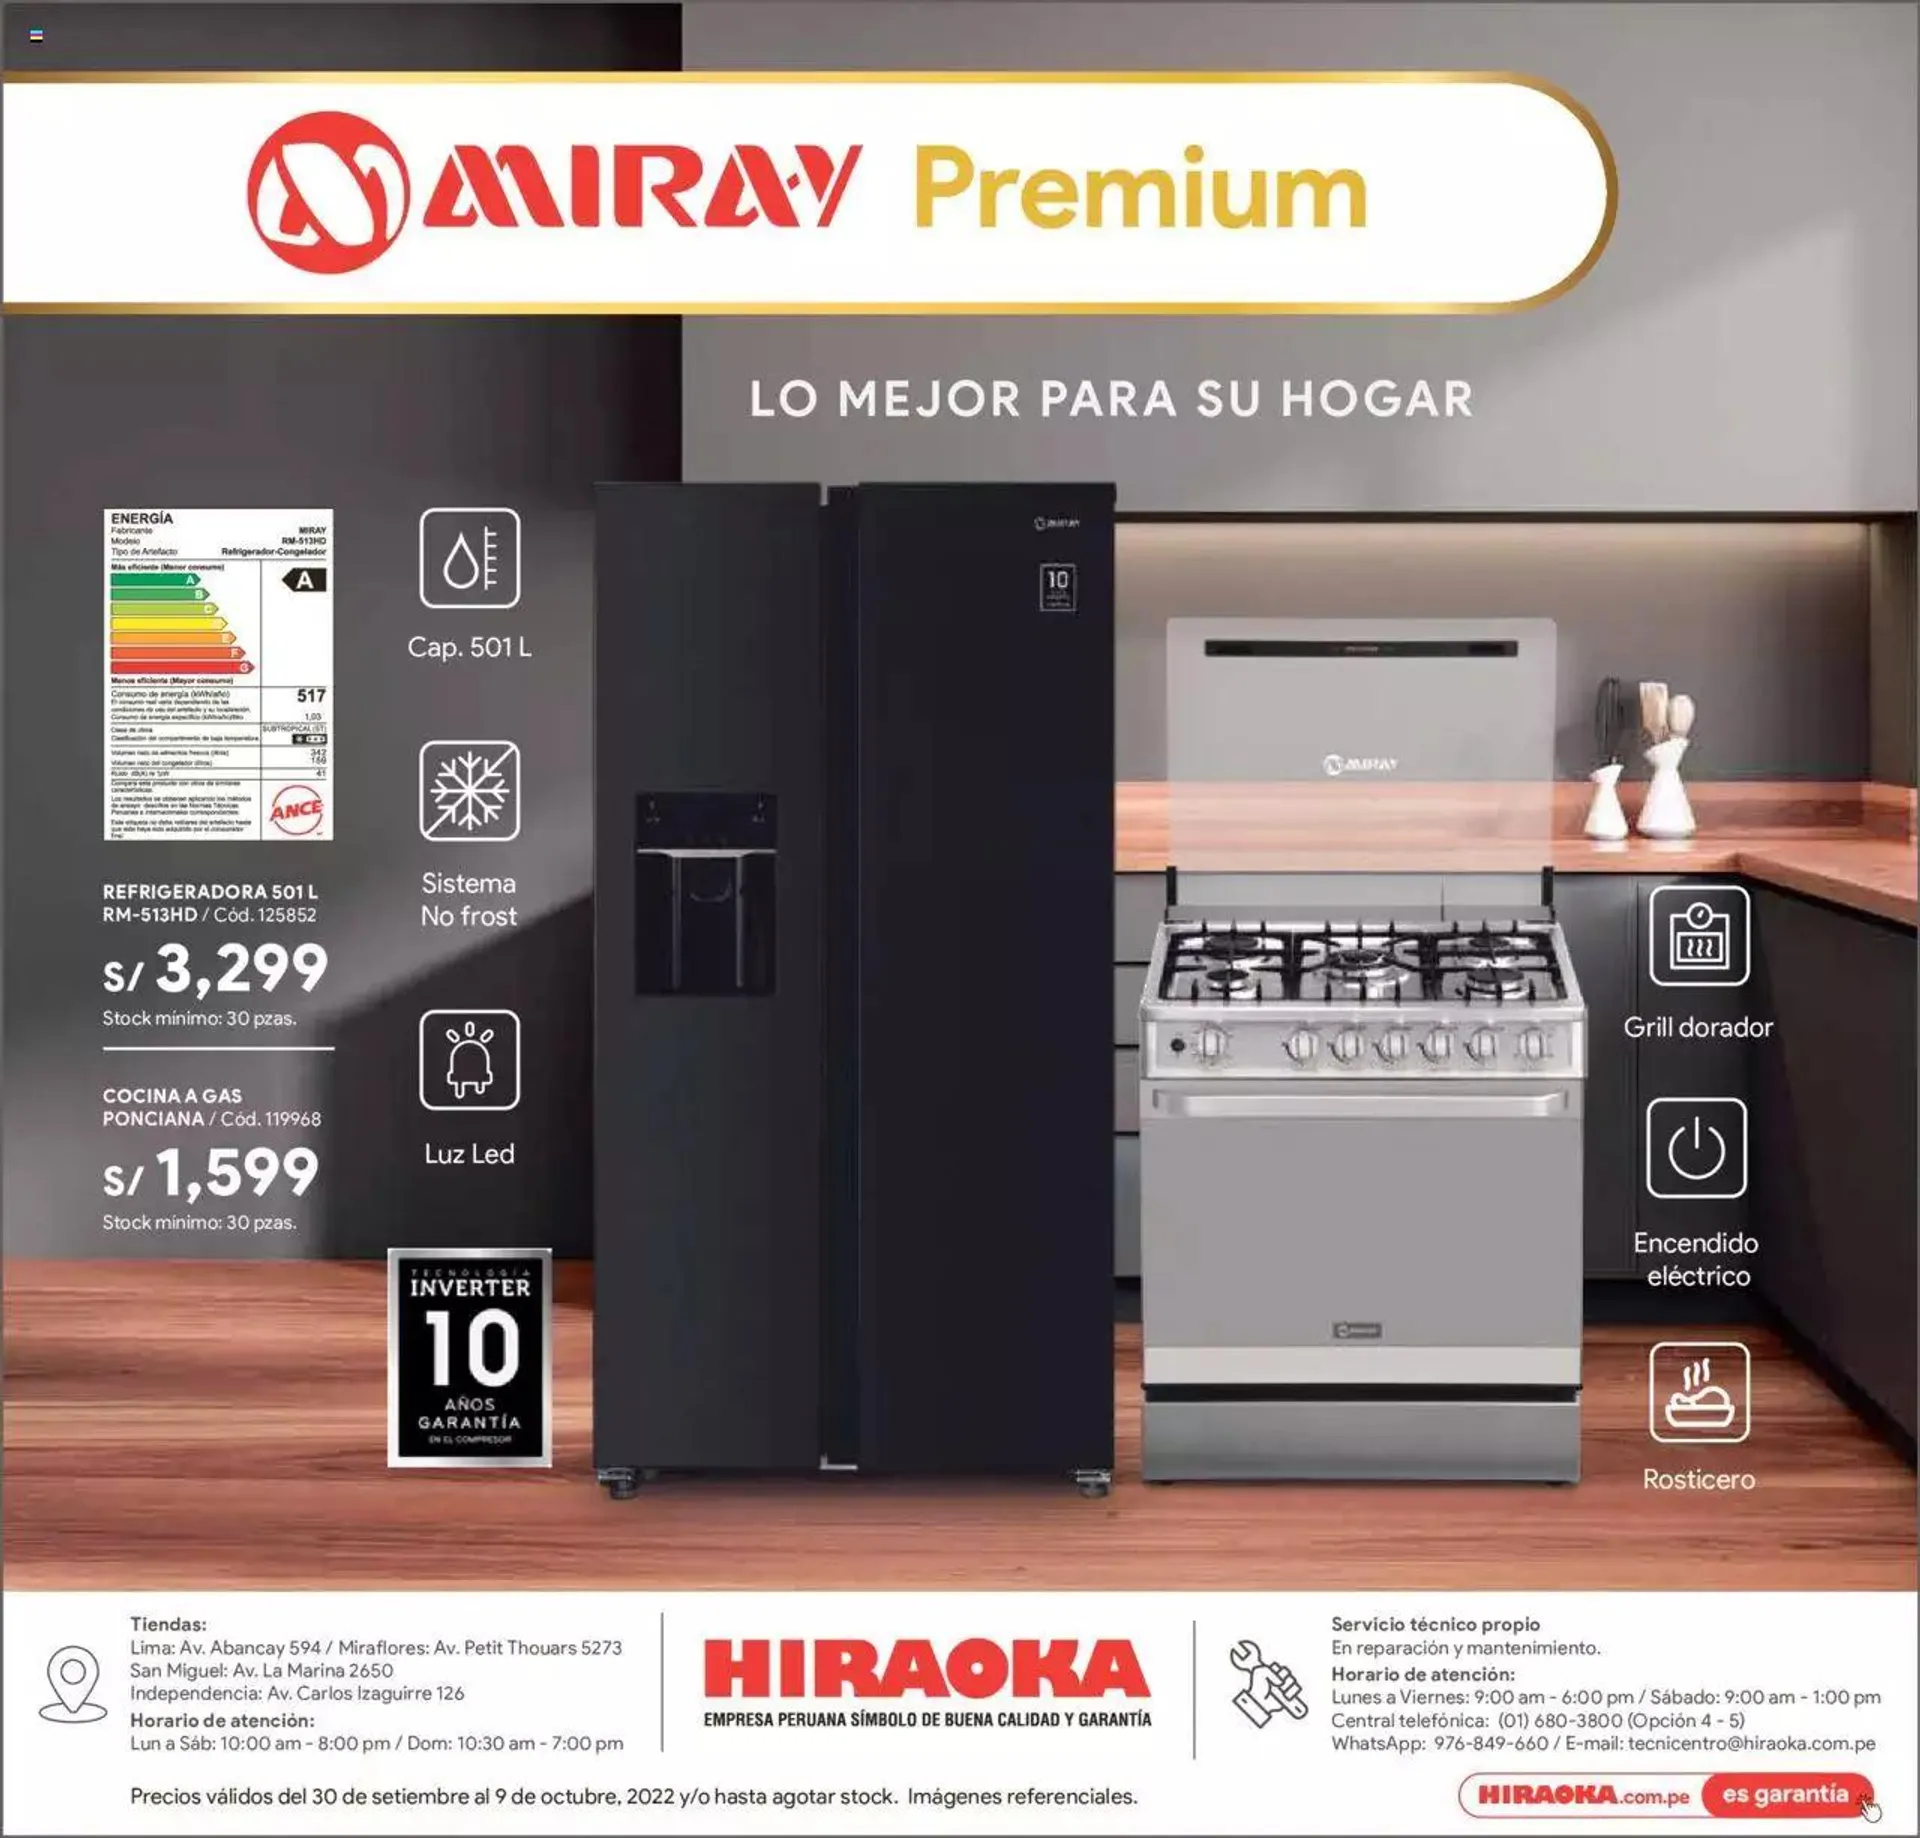 Hiraoka - Miray Premium - 0